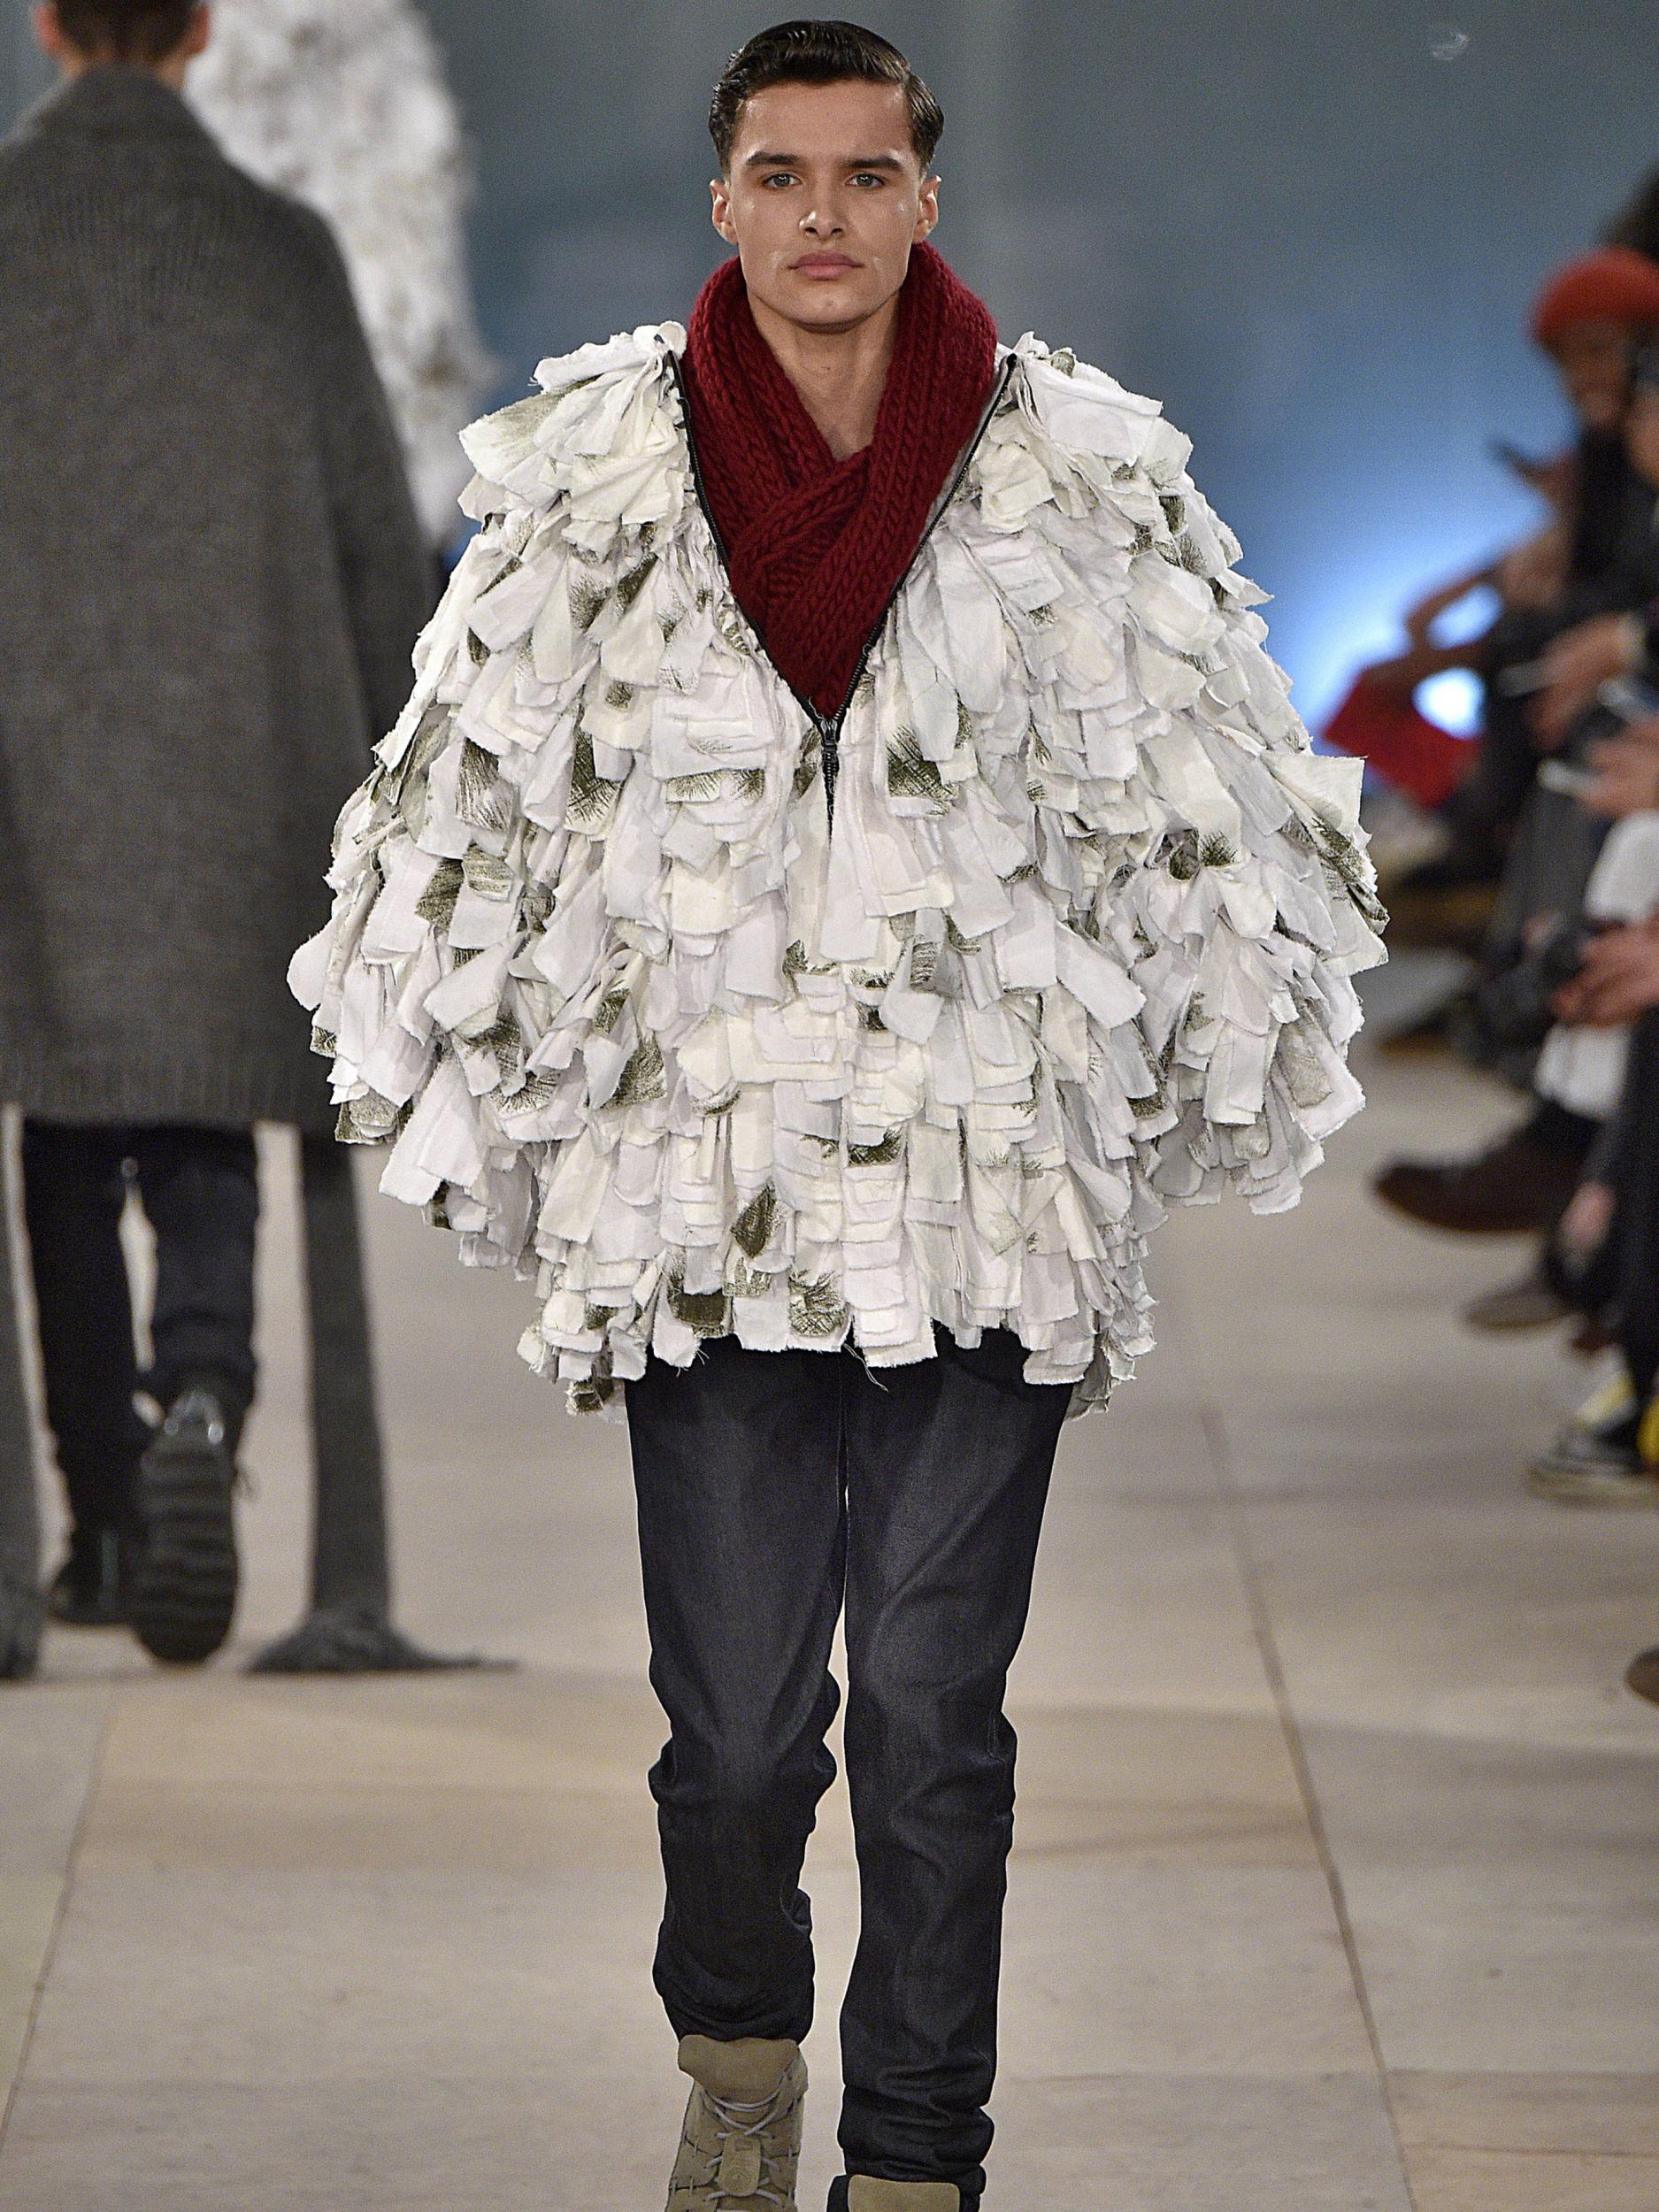 Christopher Raeburn's sustainable fashion